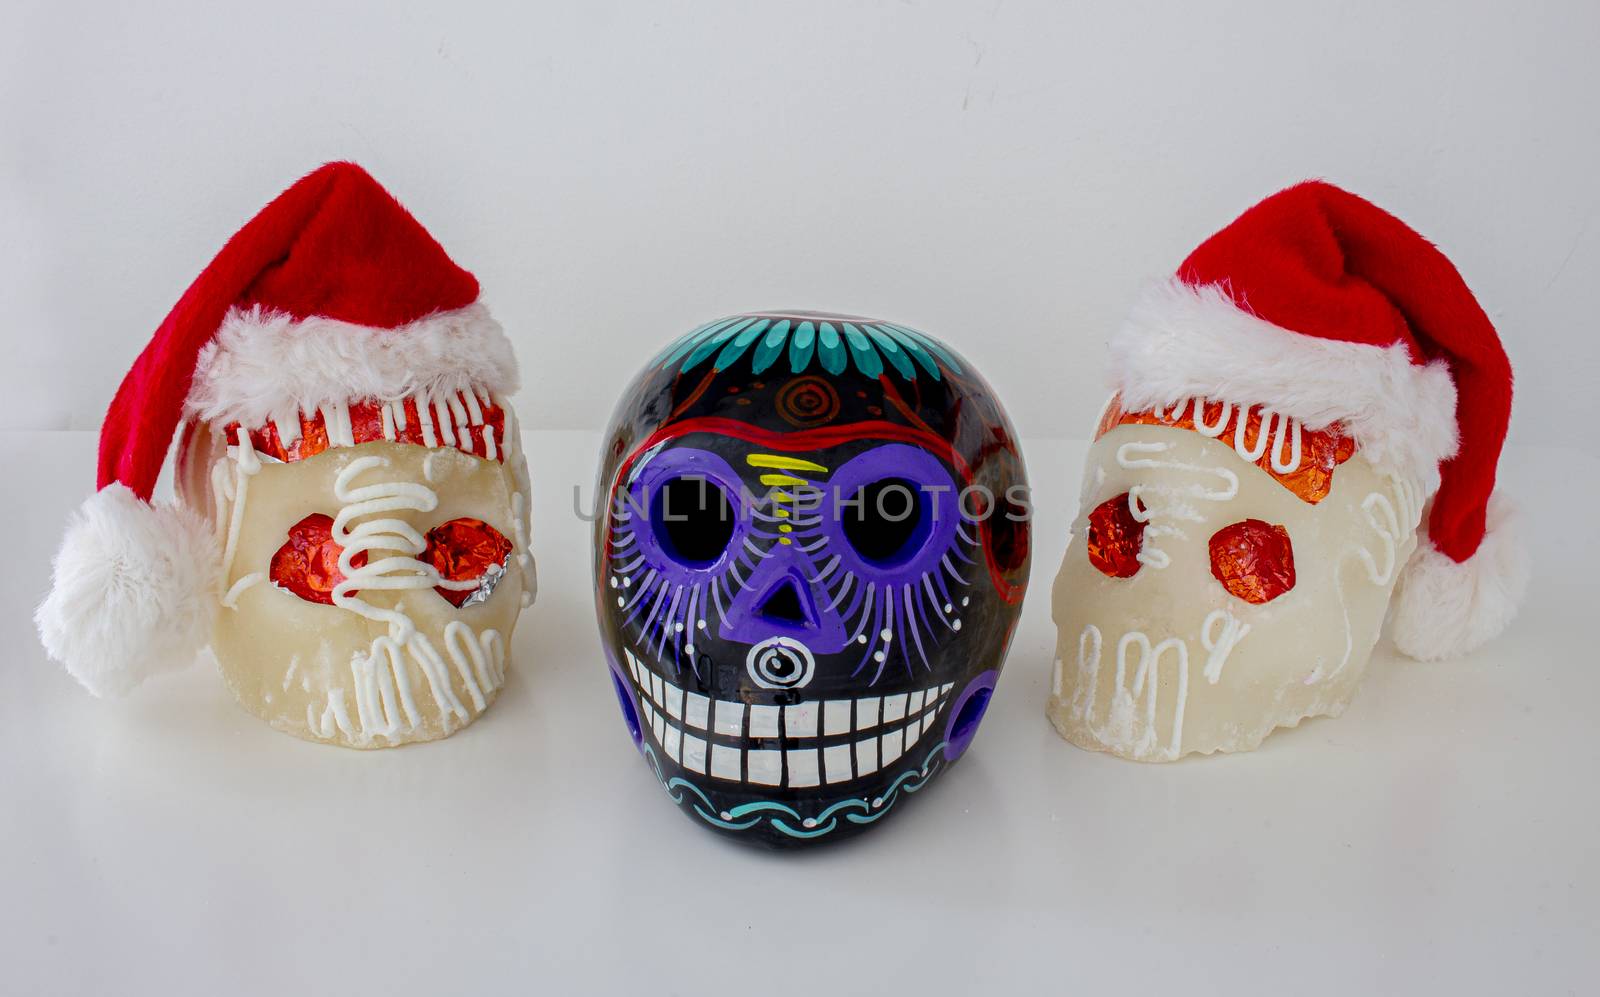 White Traditional Mexican sugar skulls with Santa hats. Mexican Christmas.(calaveritas de azucar para navidad en México) mix cultures.